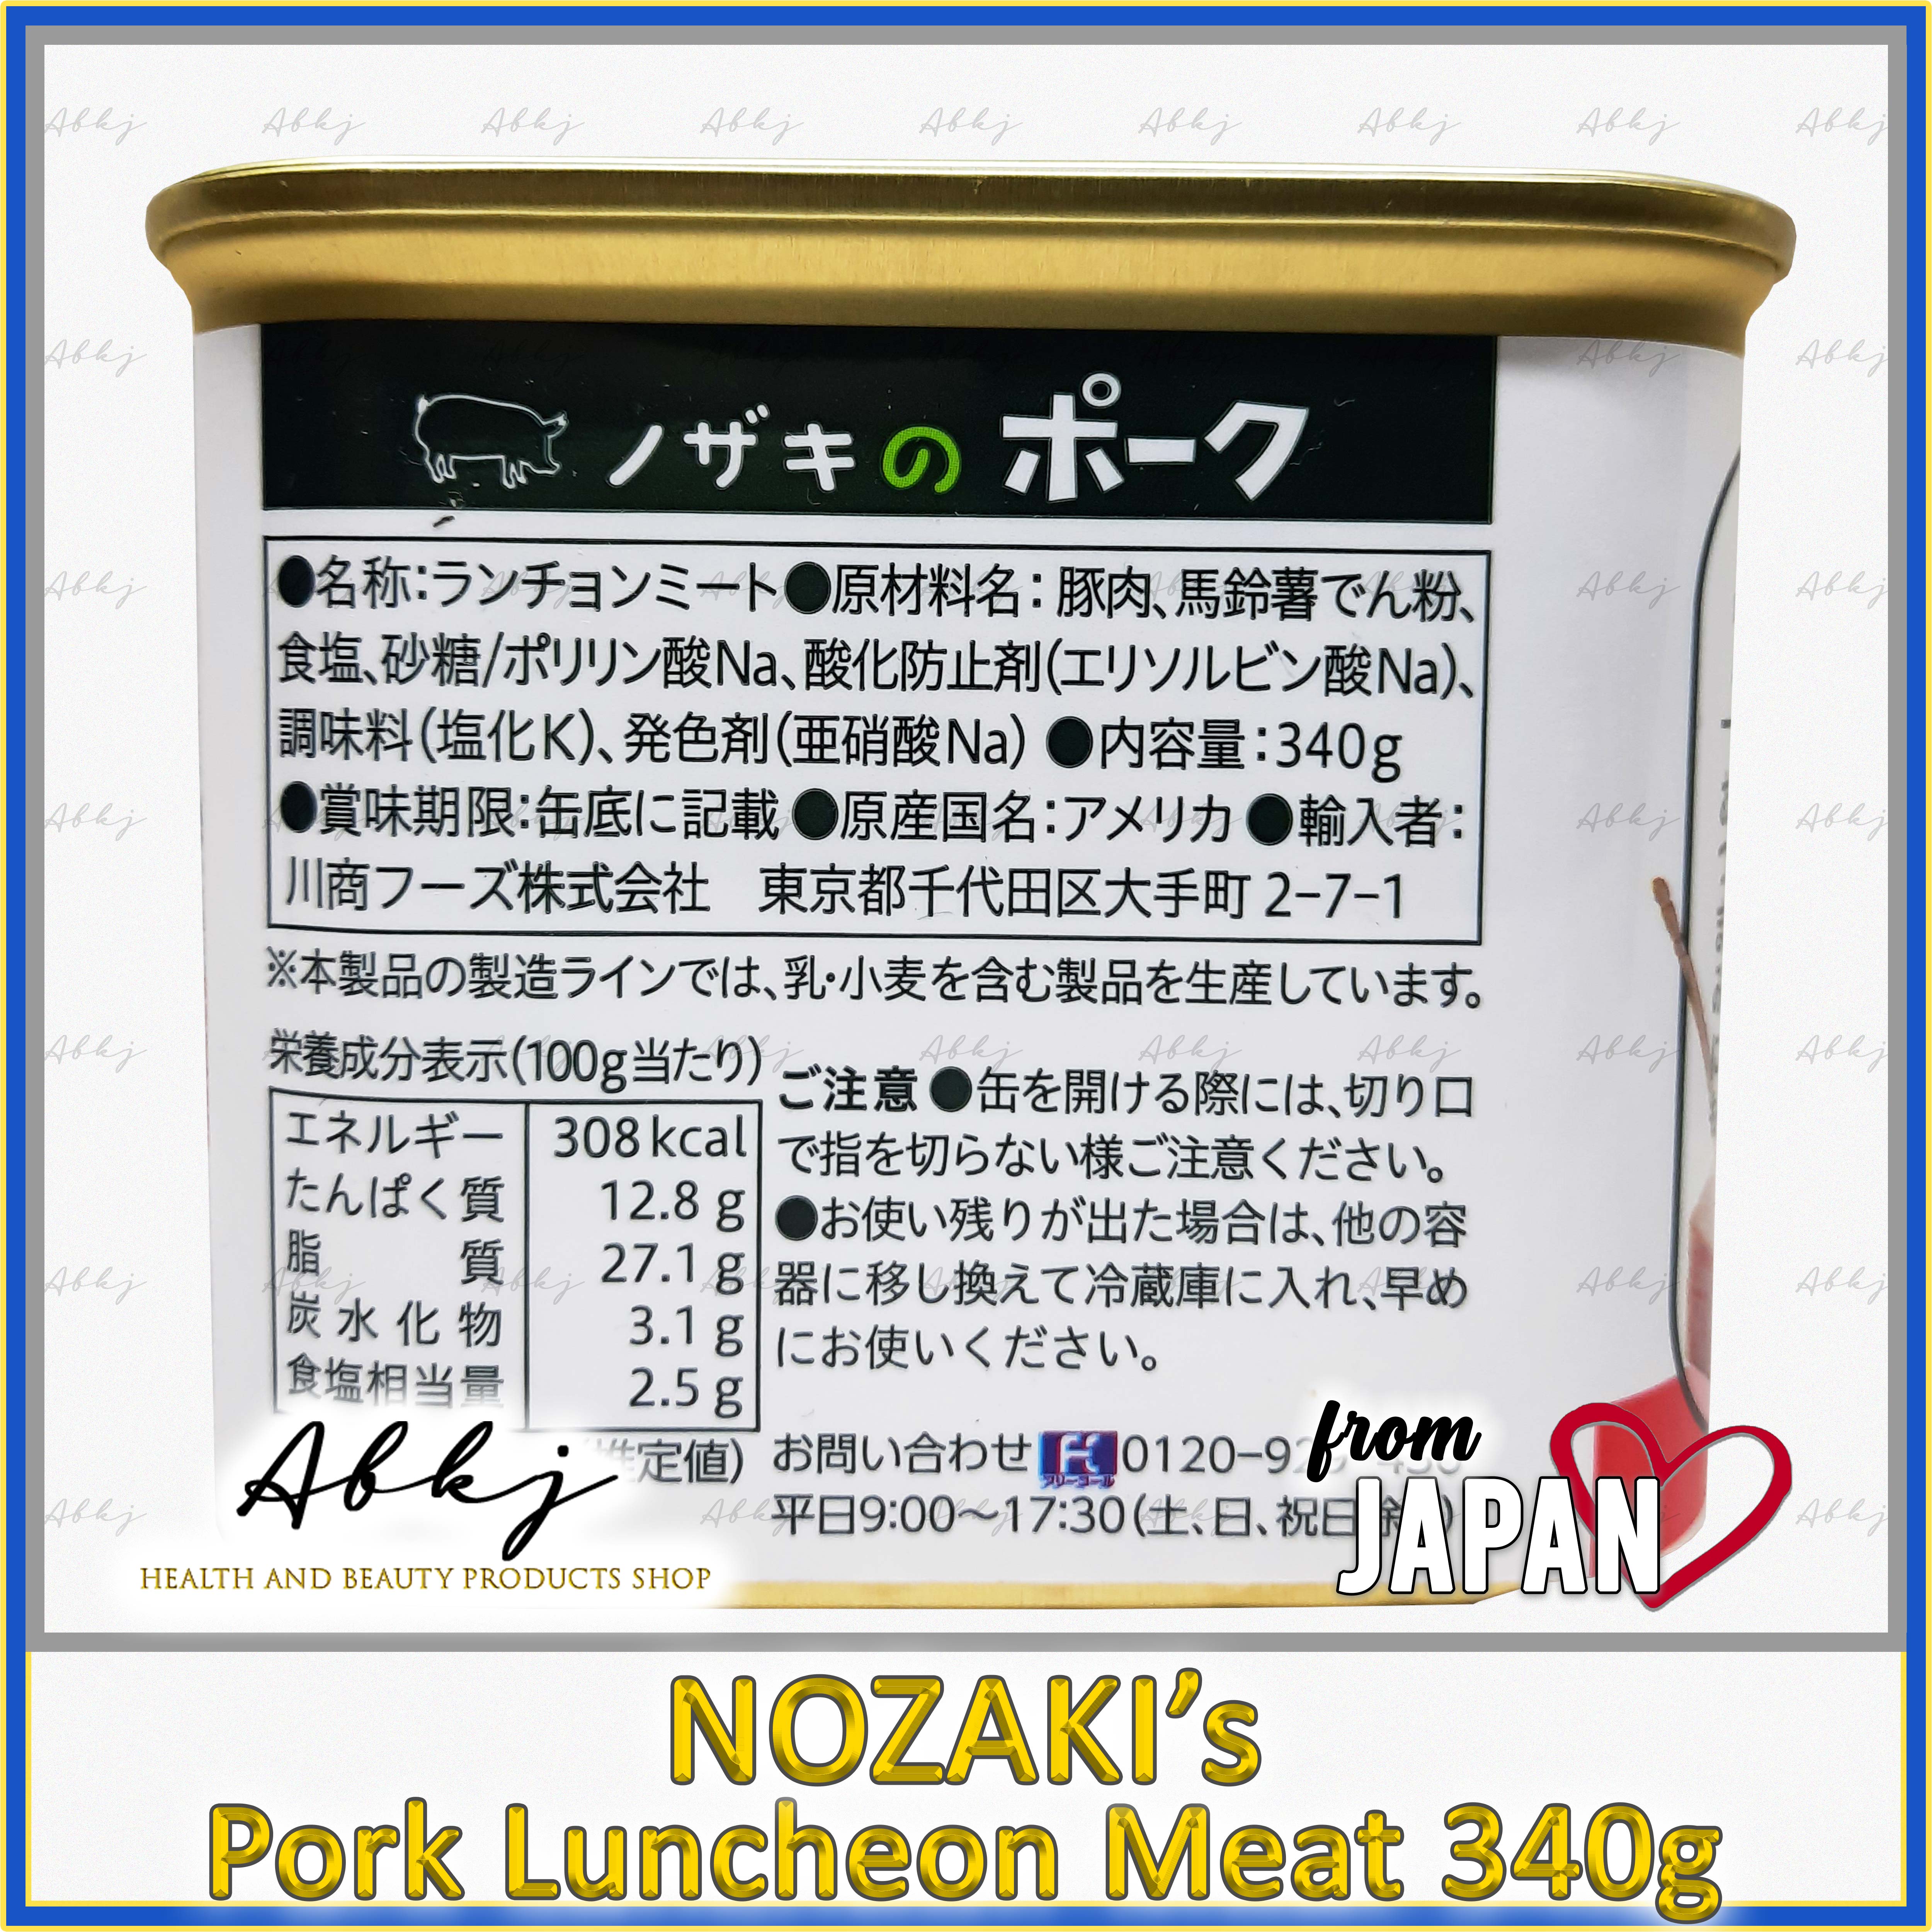 PH　Luncheon　340g　Meat　Lazada　NOZAKI'S　Pork